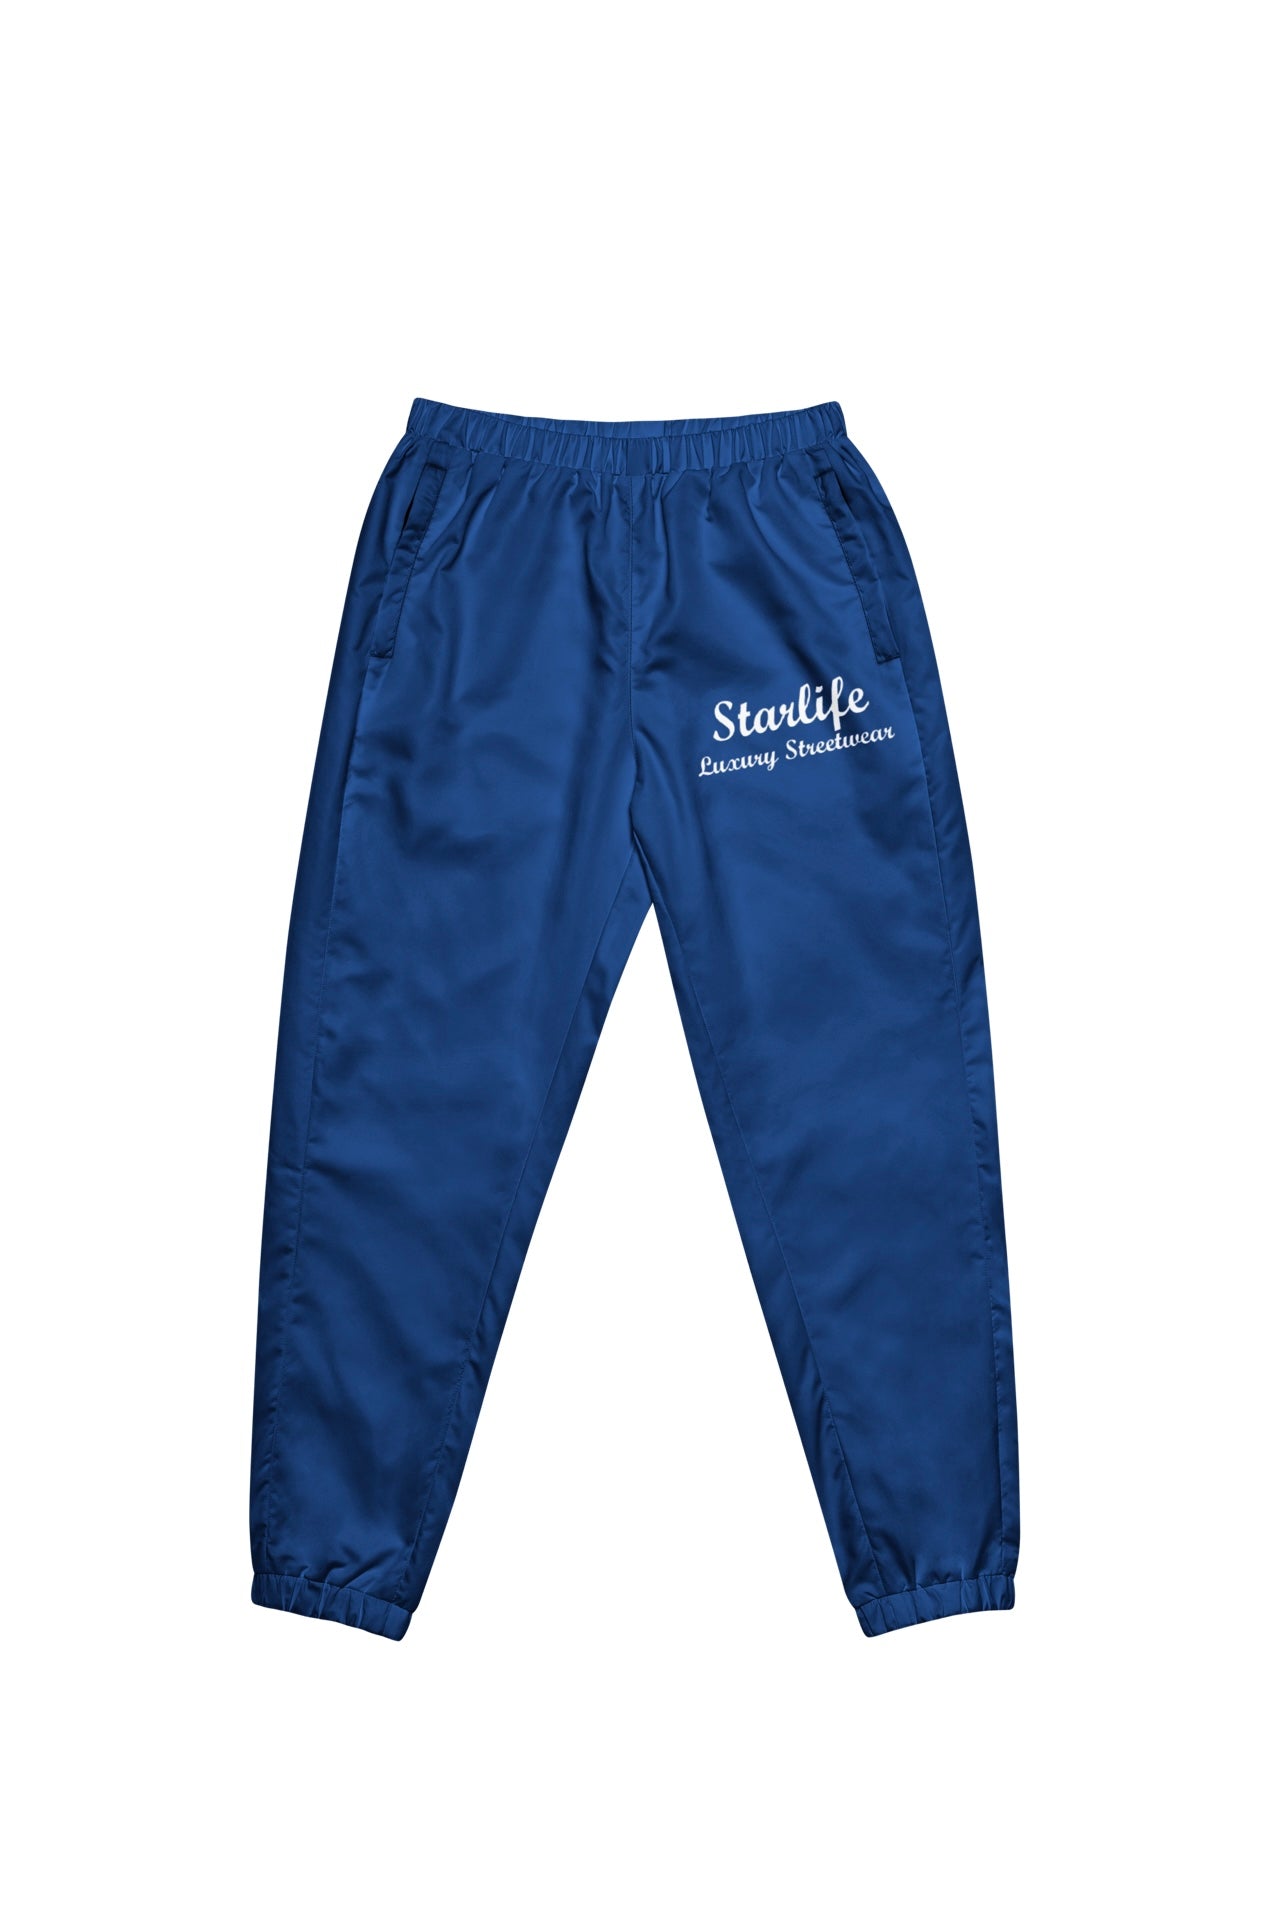 Starlife Navy Blue Track Pants